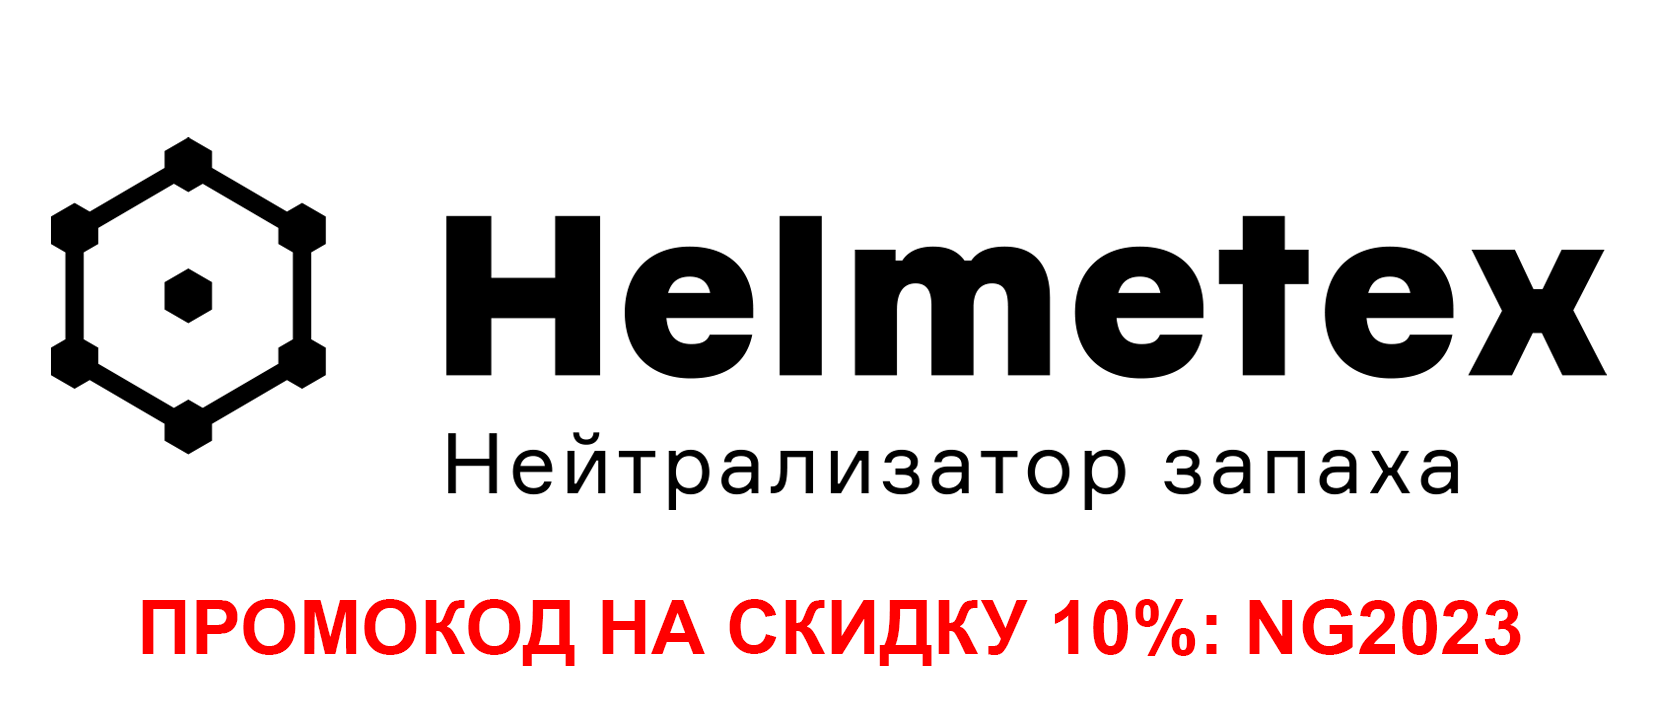 Helmetex